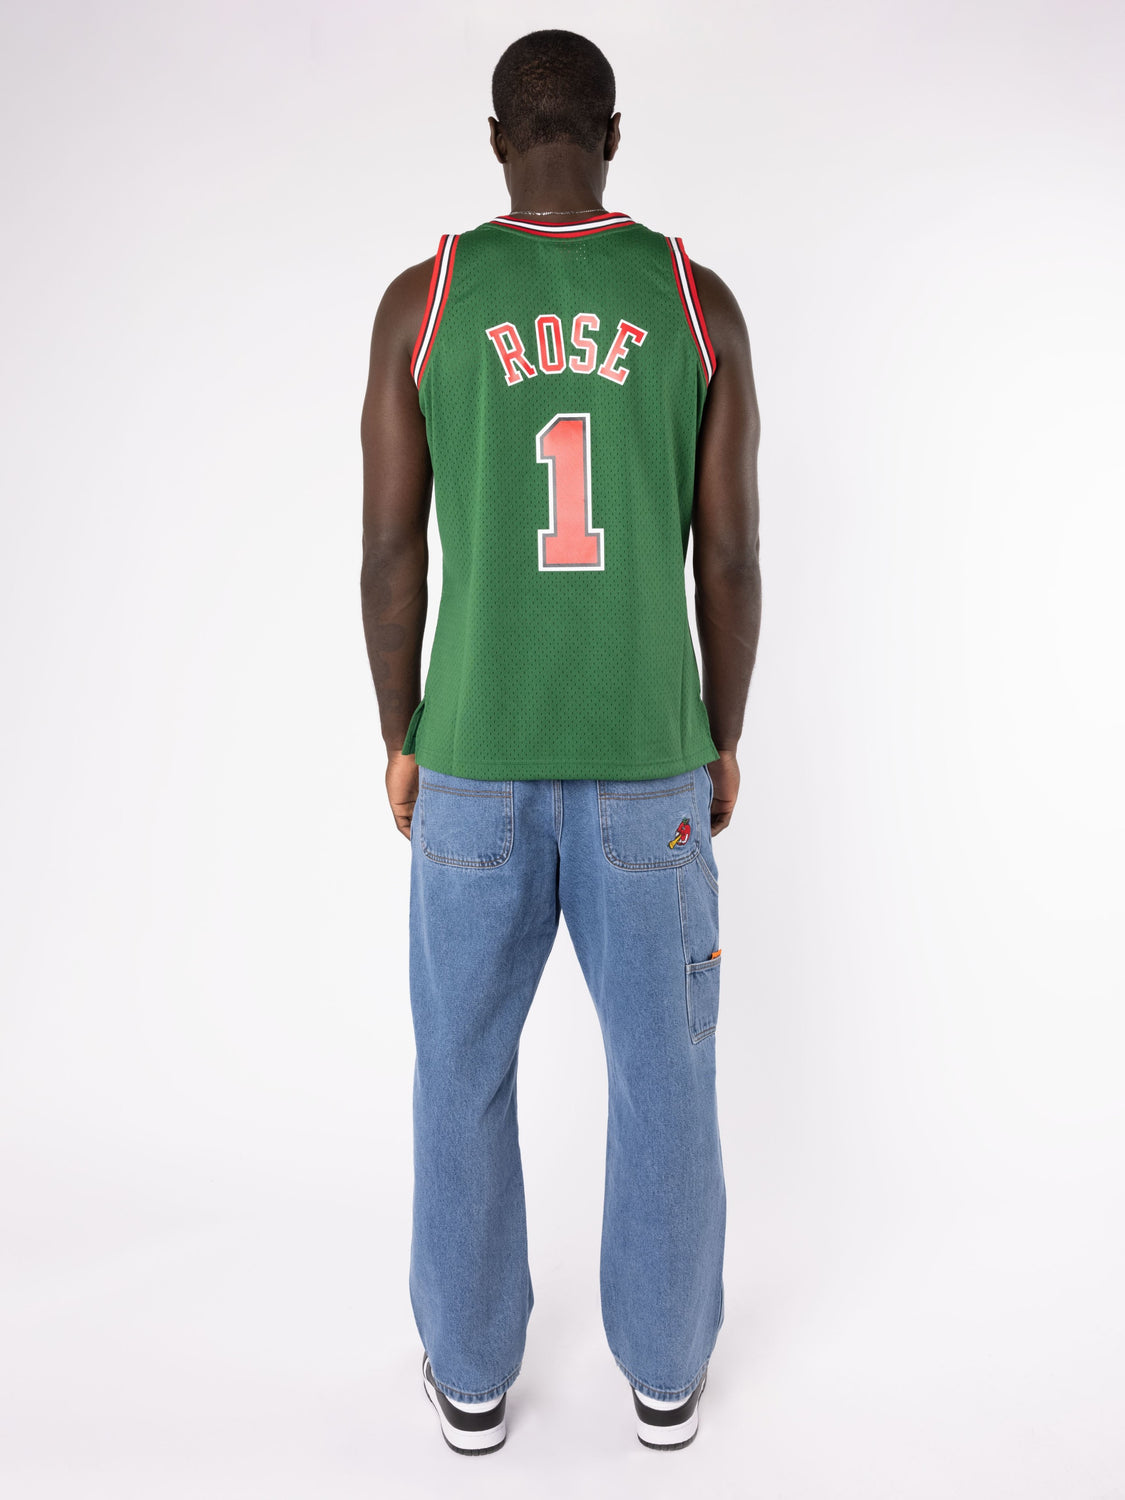 Mitchell & Ness Derrick Rose Chicago Bulls Green Hardwood Classics 2008-09 Authentic Jersey